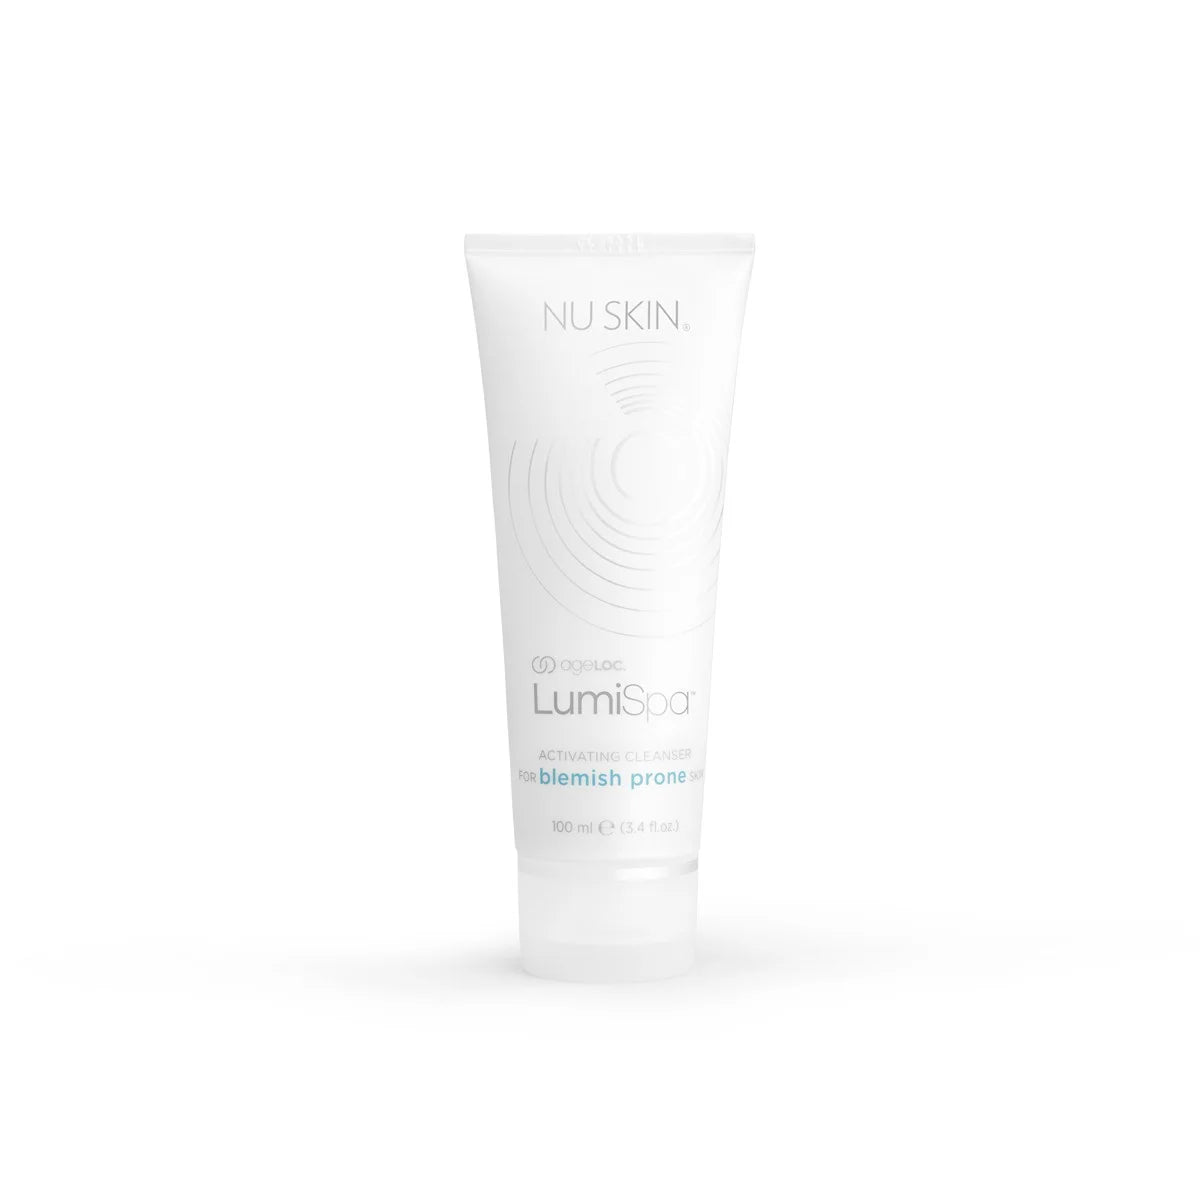 NuSkin ageLOC LumiSpa Activating Face Cleanser: Acne-prone skin